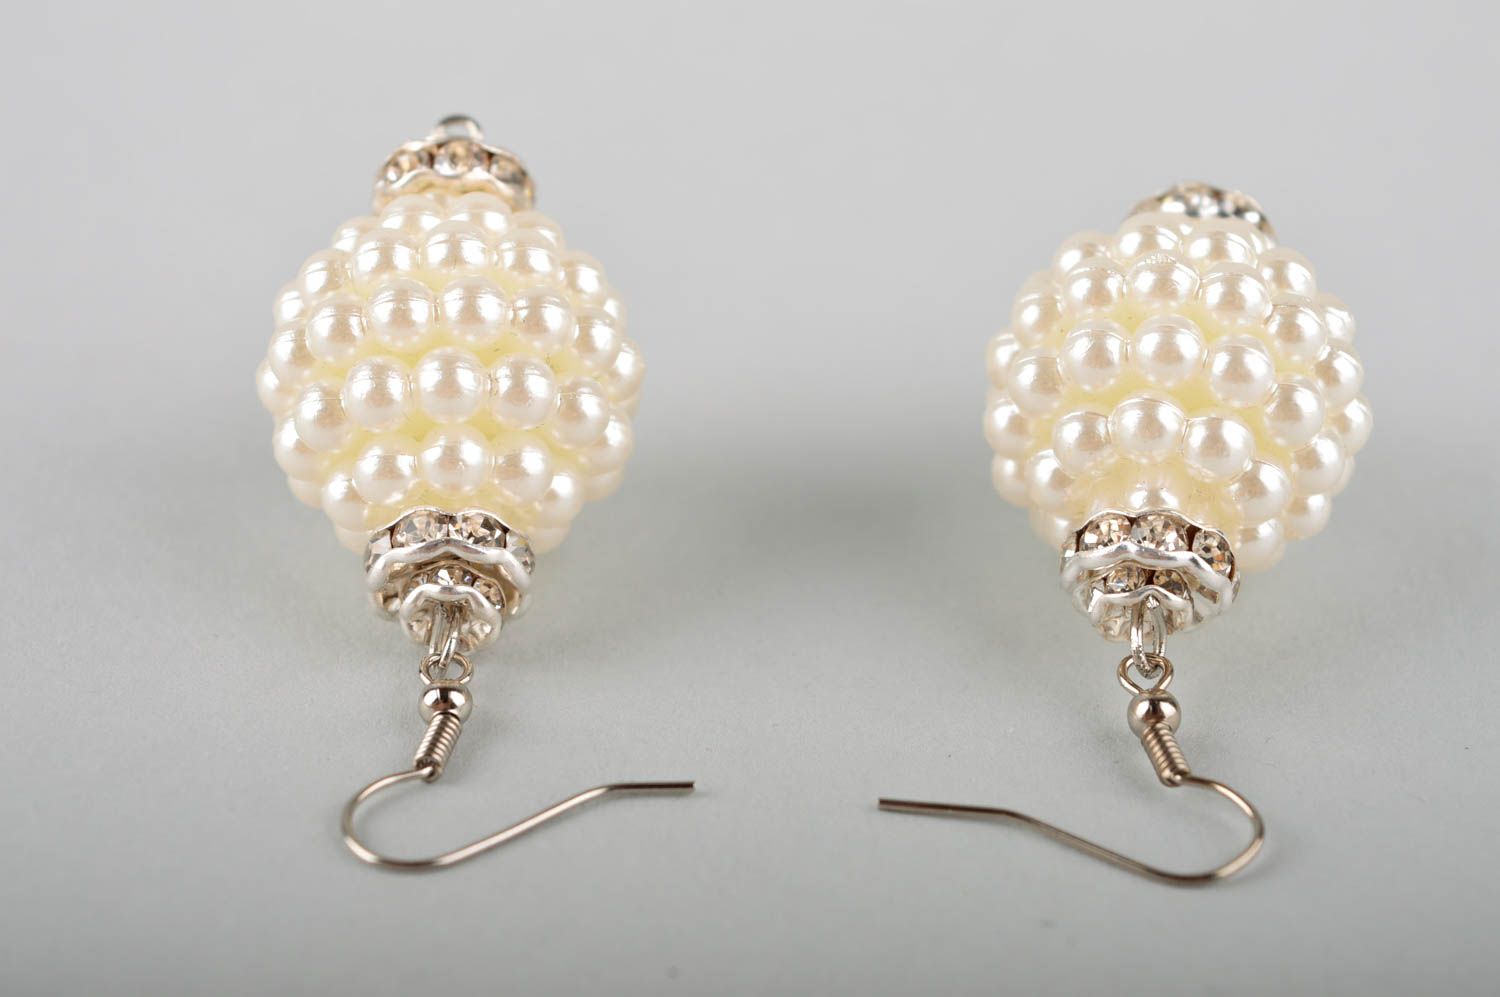 Long beaded earrings handmade earrings with charms fashion jewelry for girls photo 5